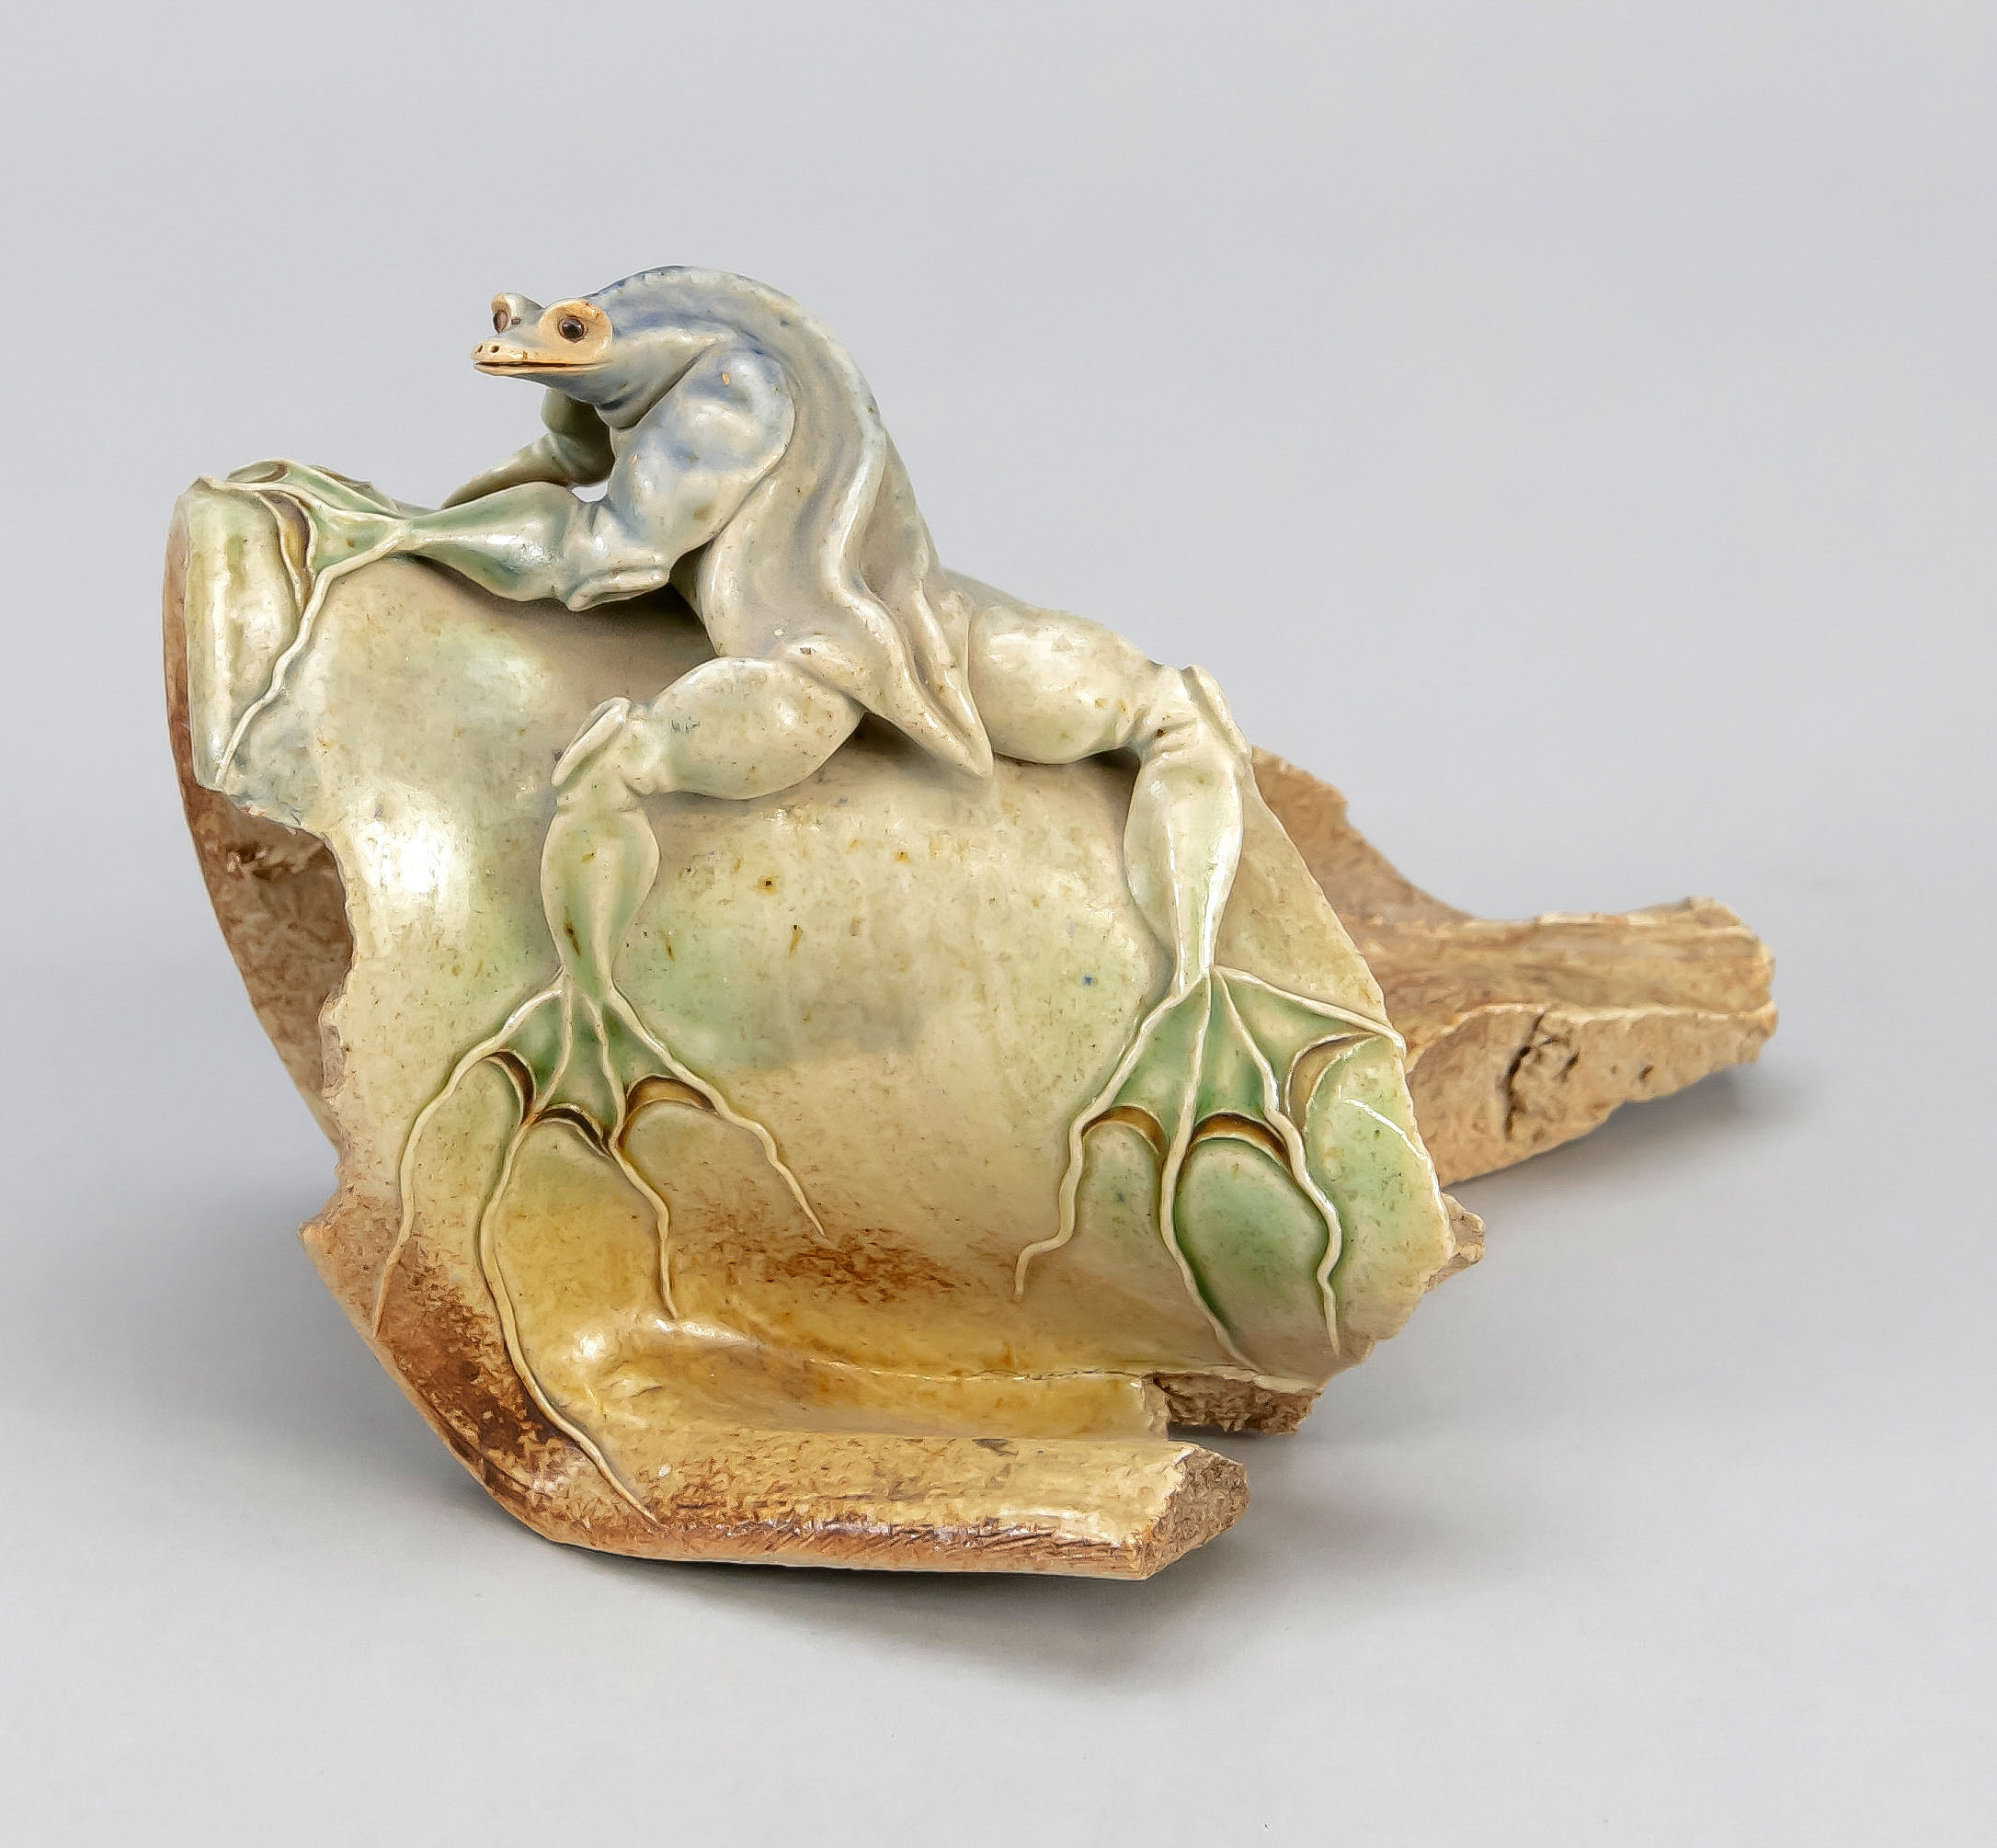 Unidentified ceramic artist, 2nd half of the 20th century, frog sitting on a shard, ceramic,